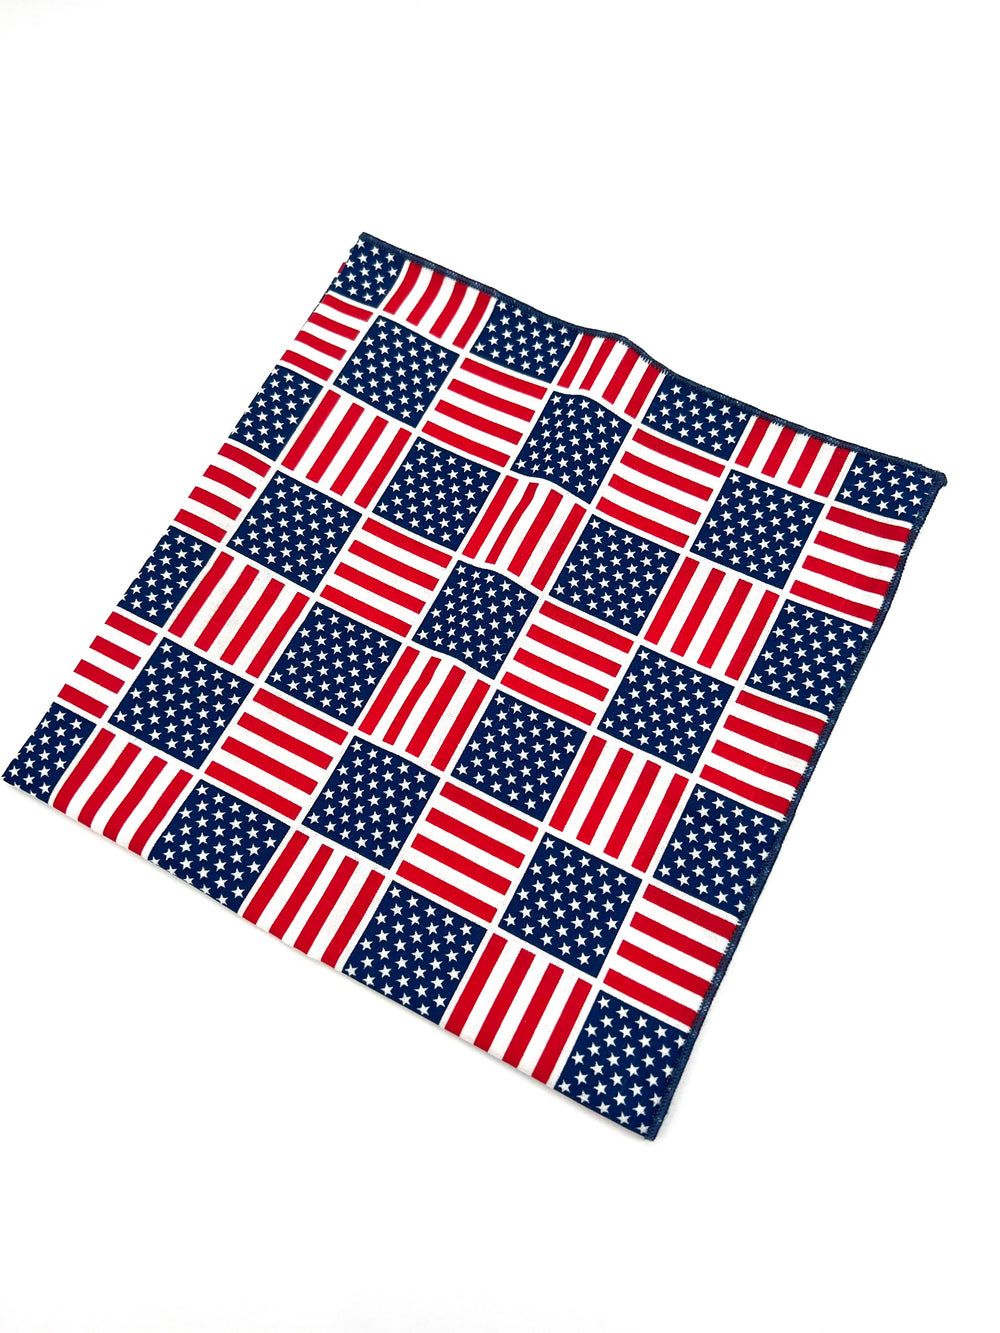 The American Check Handkerchief